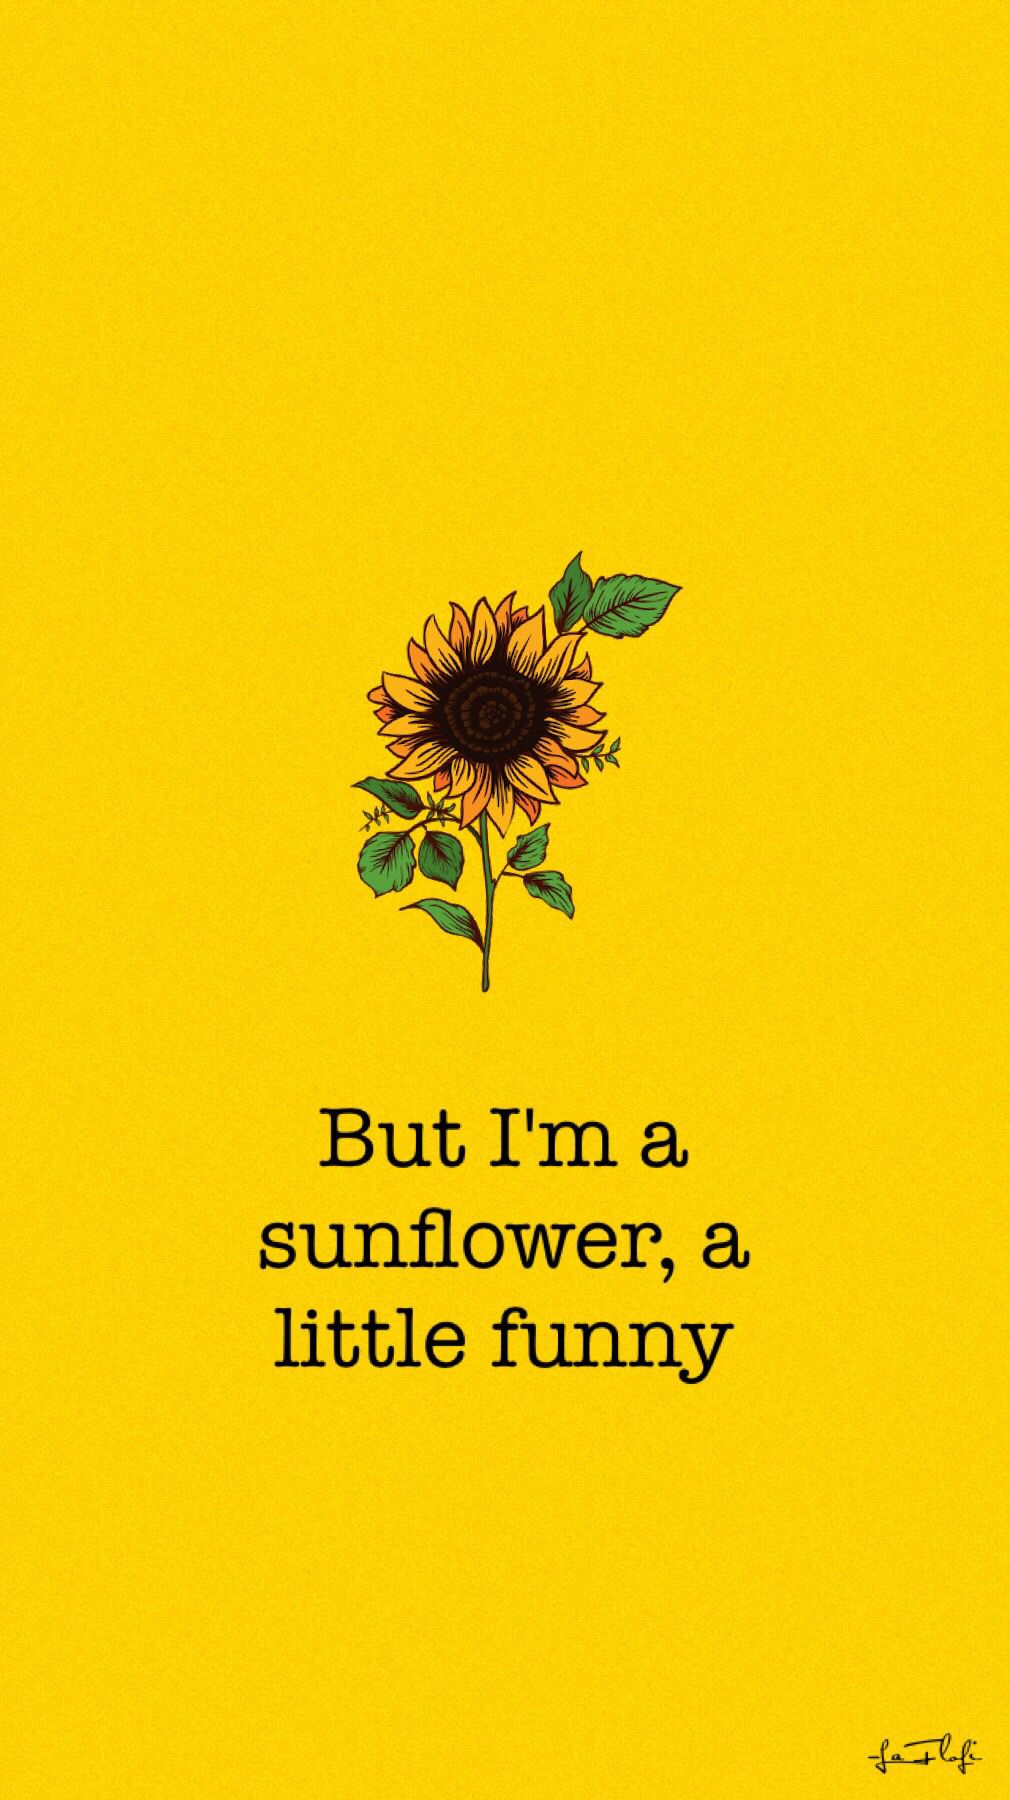 Tumblr sunflower quotes 19 sierra burgess is a loser wallpaper on wallpaperafari